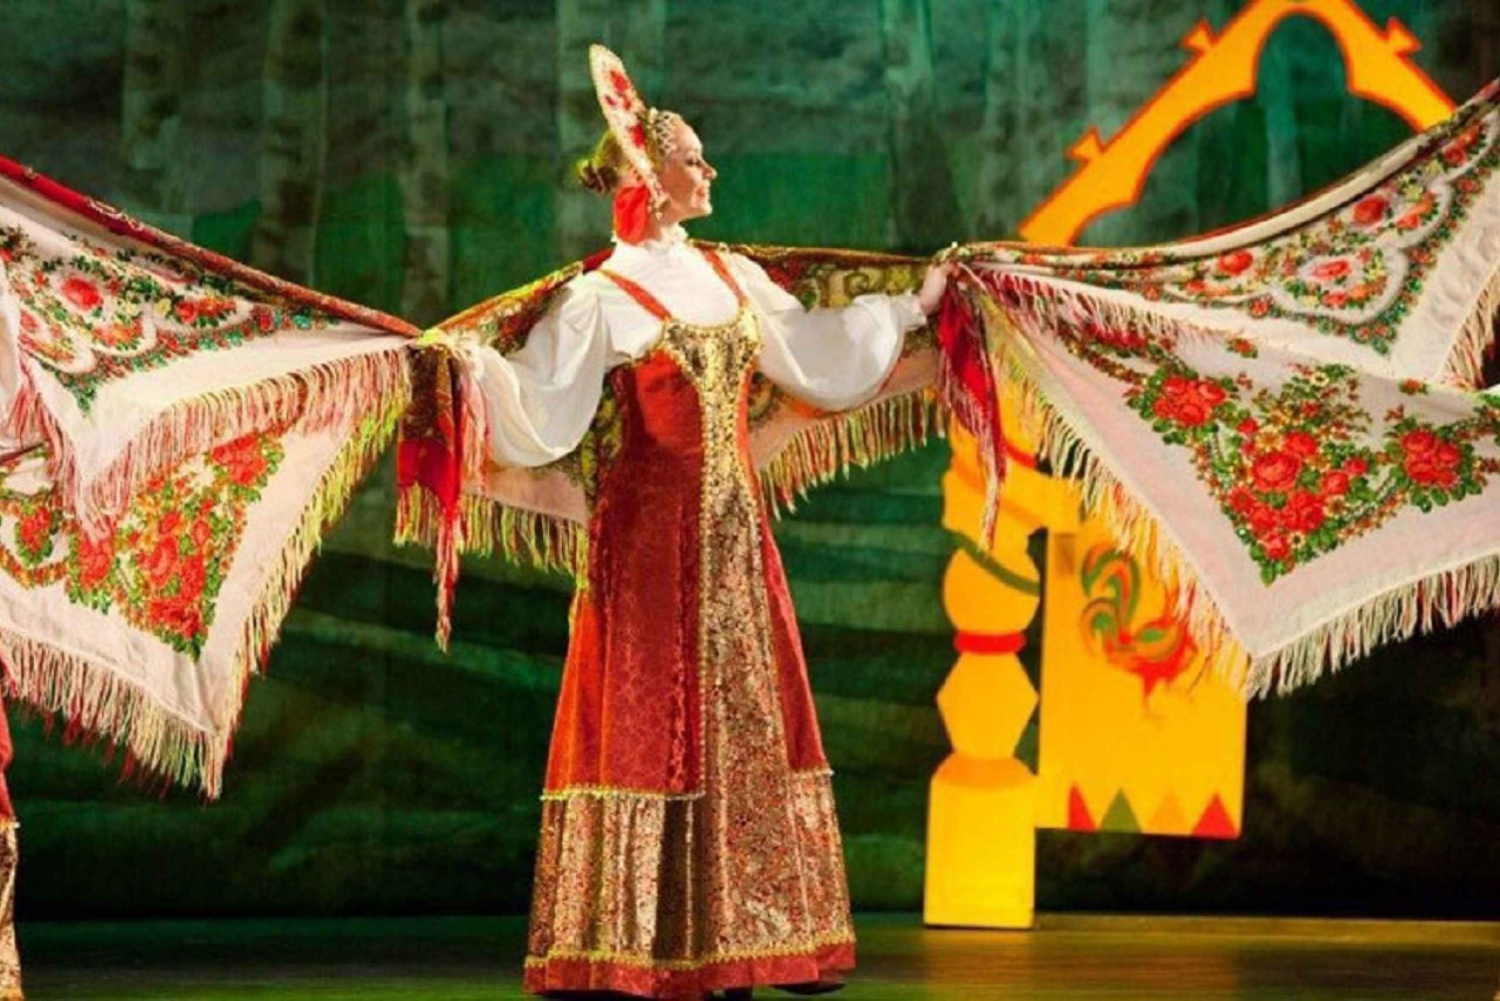 St. Petersburg: Traditional Fairytale Folk Show